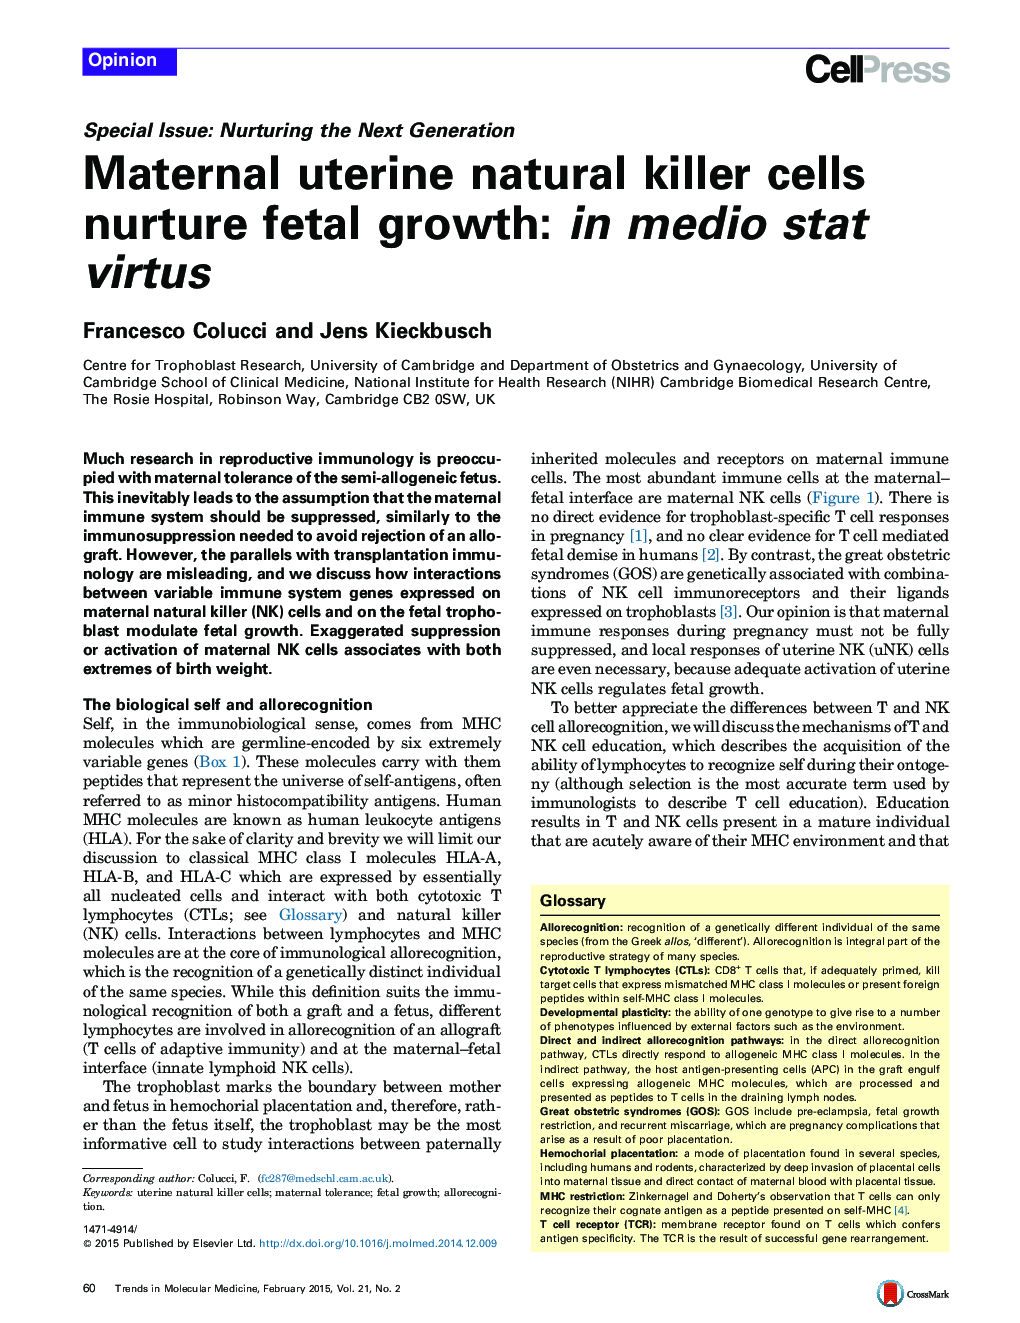 Maternal uterine natural killer cells nurture fetal growth: in medio stat virtus